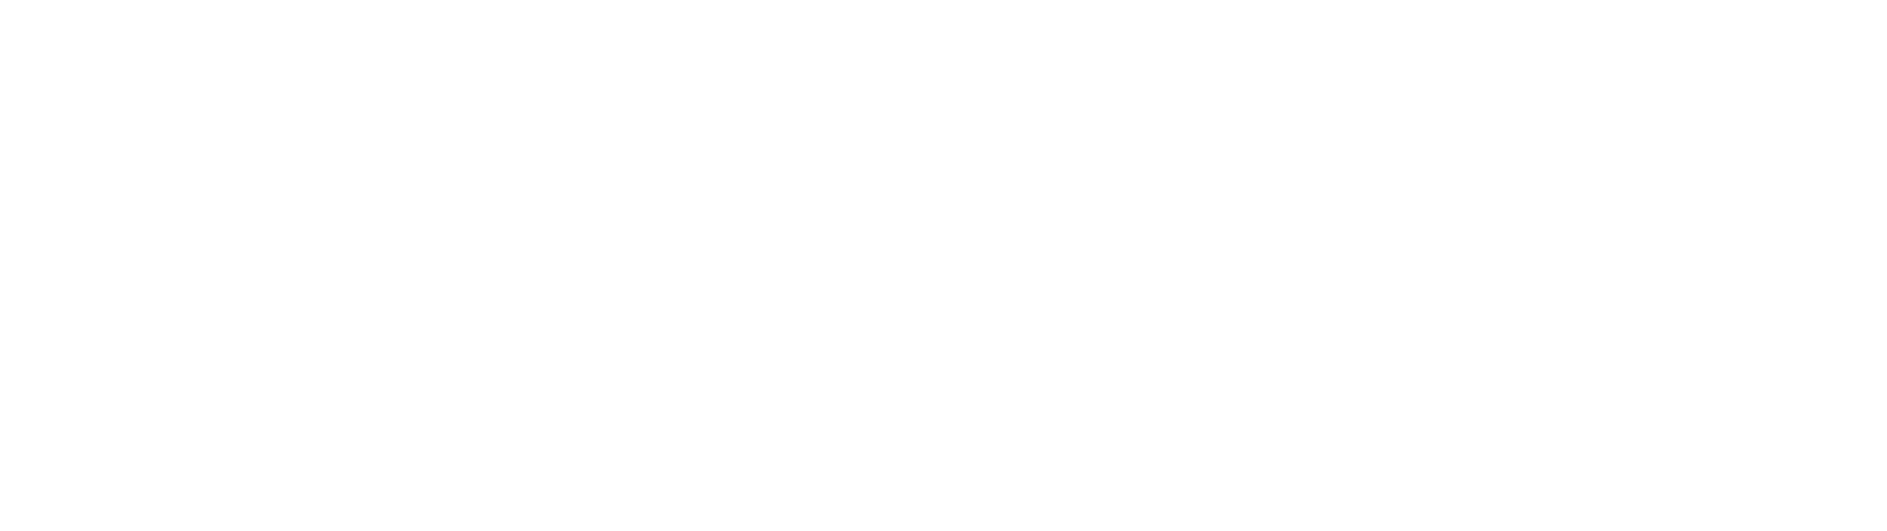 Black and White No Brand Logo - Becks Logos For Print Or Interactive. Beck's Hybrids Multimedia